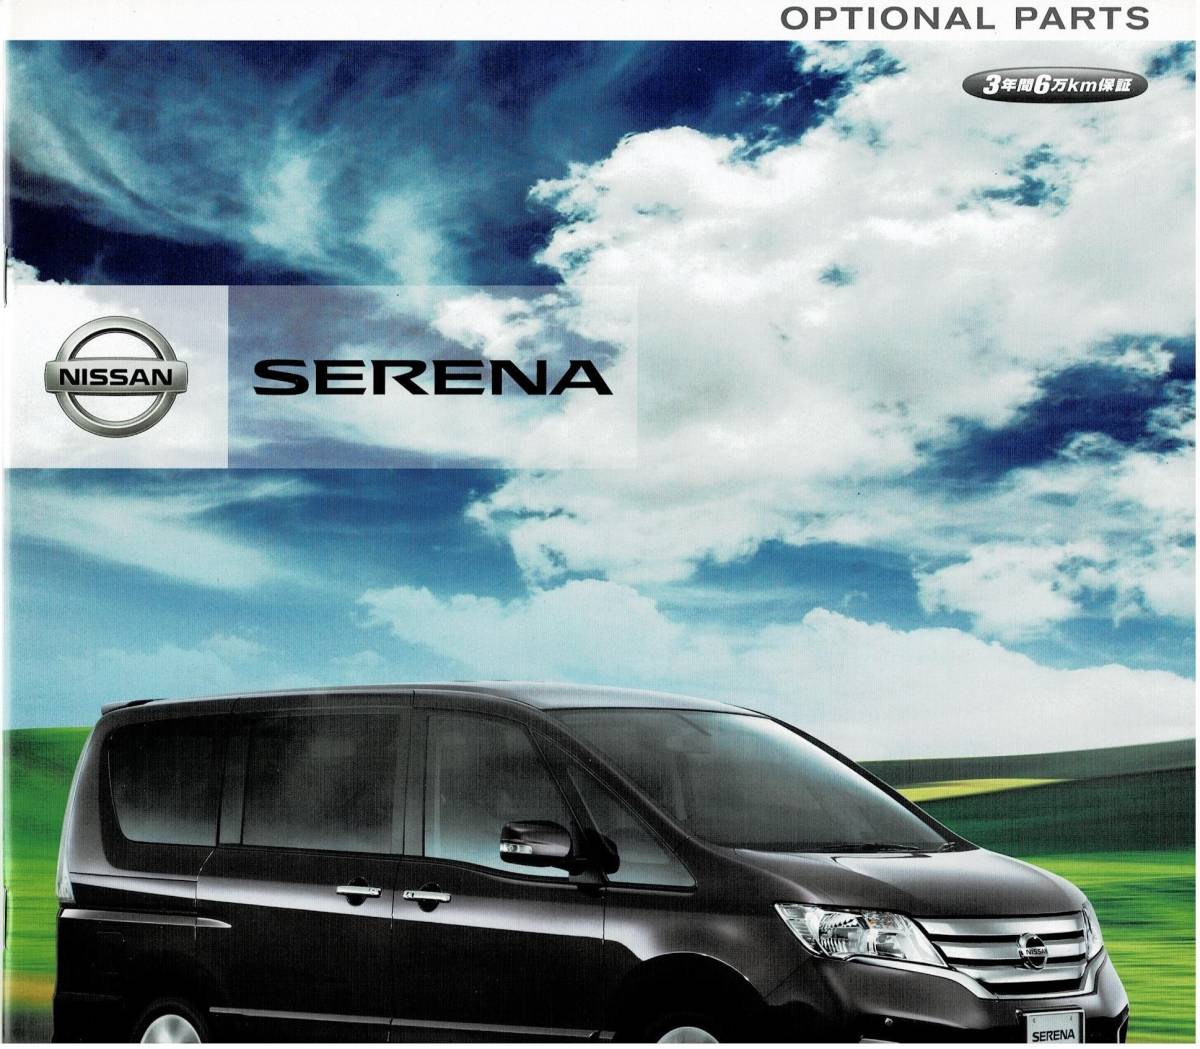  Nissan C26 Serena каталог +OP (2012 год 8 месяц & 2010 год 11 месяц )